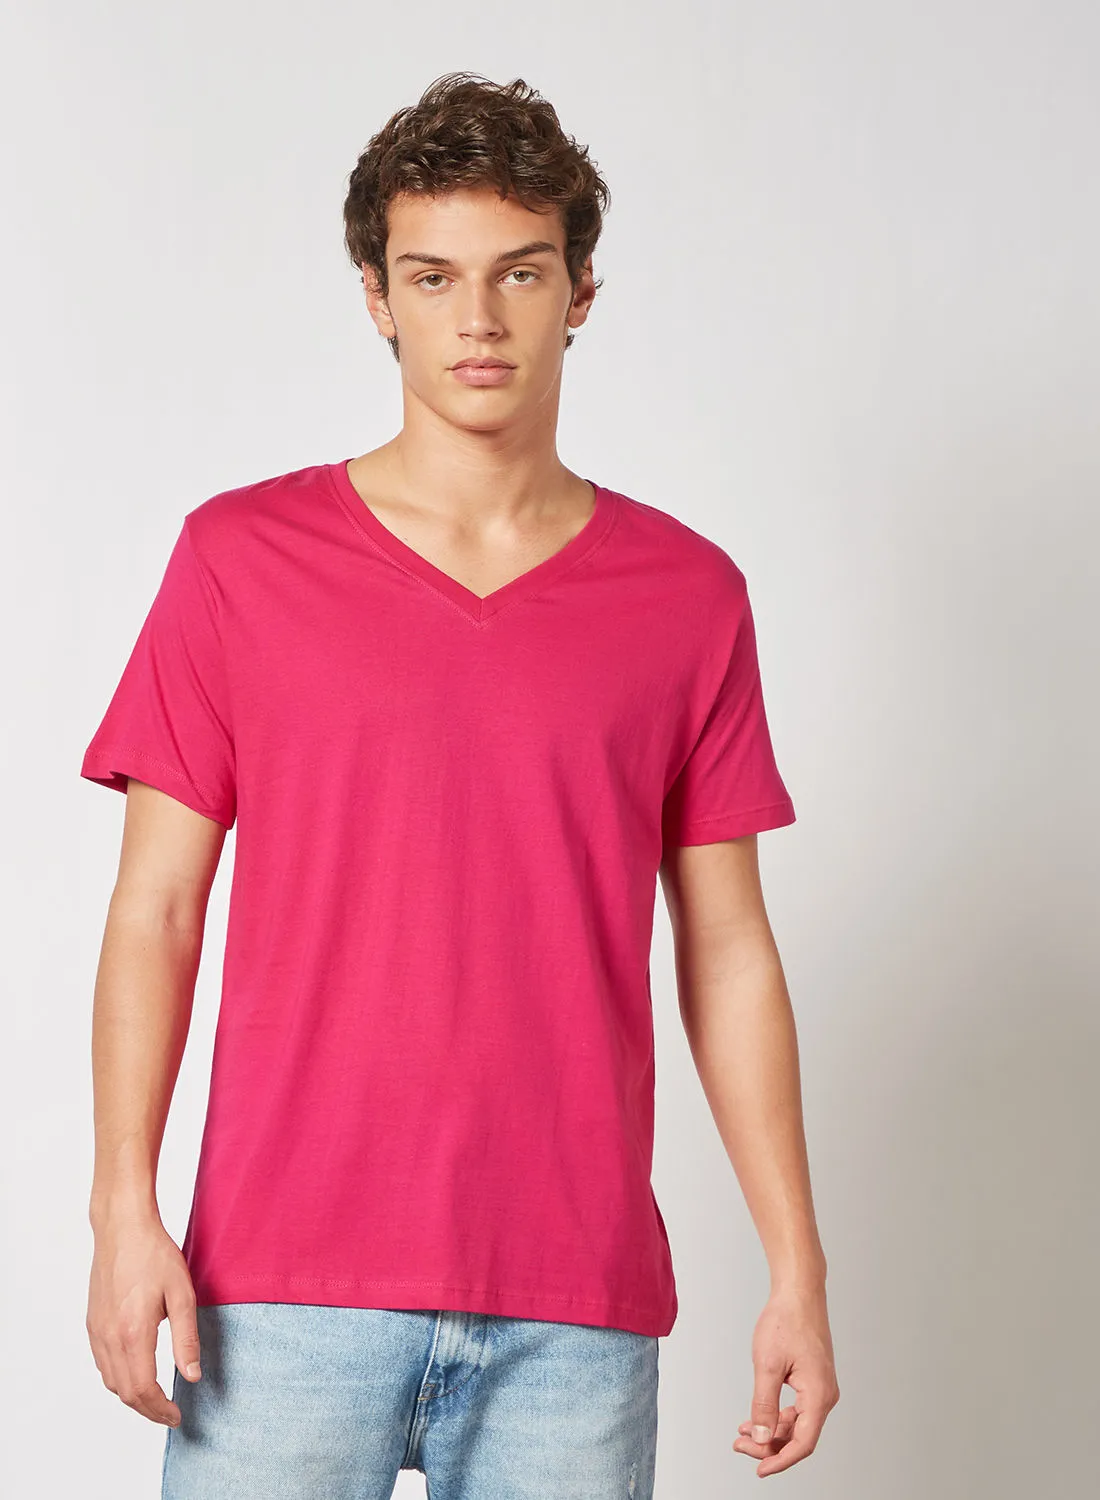 STATE 8 Basic V-Neck T-Shirt Pink